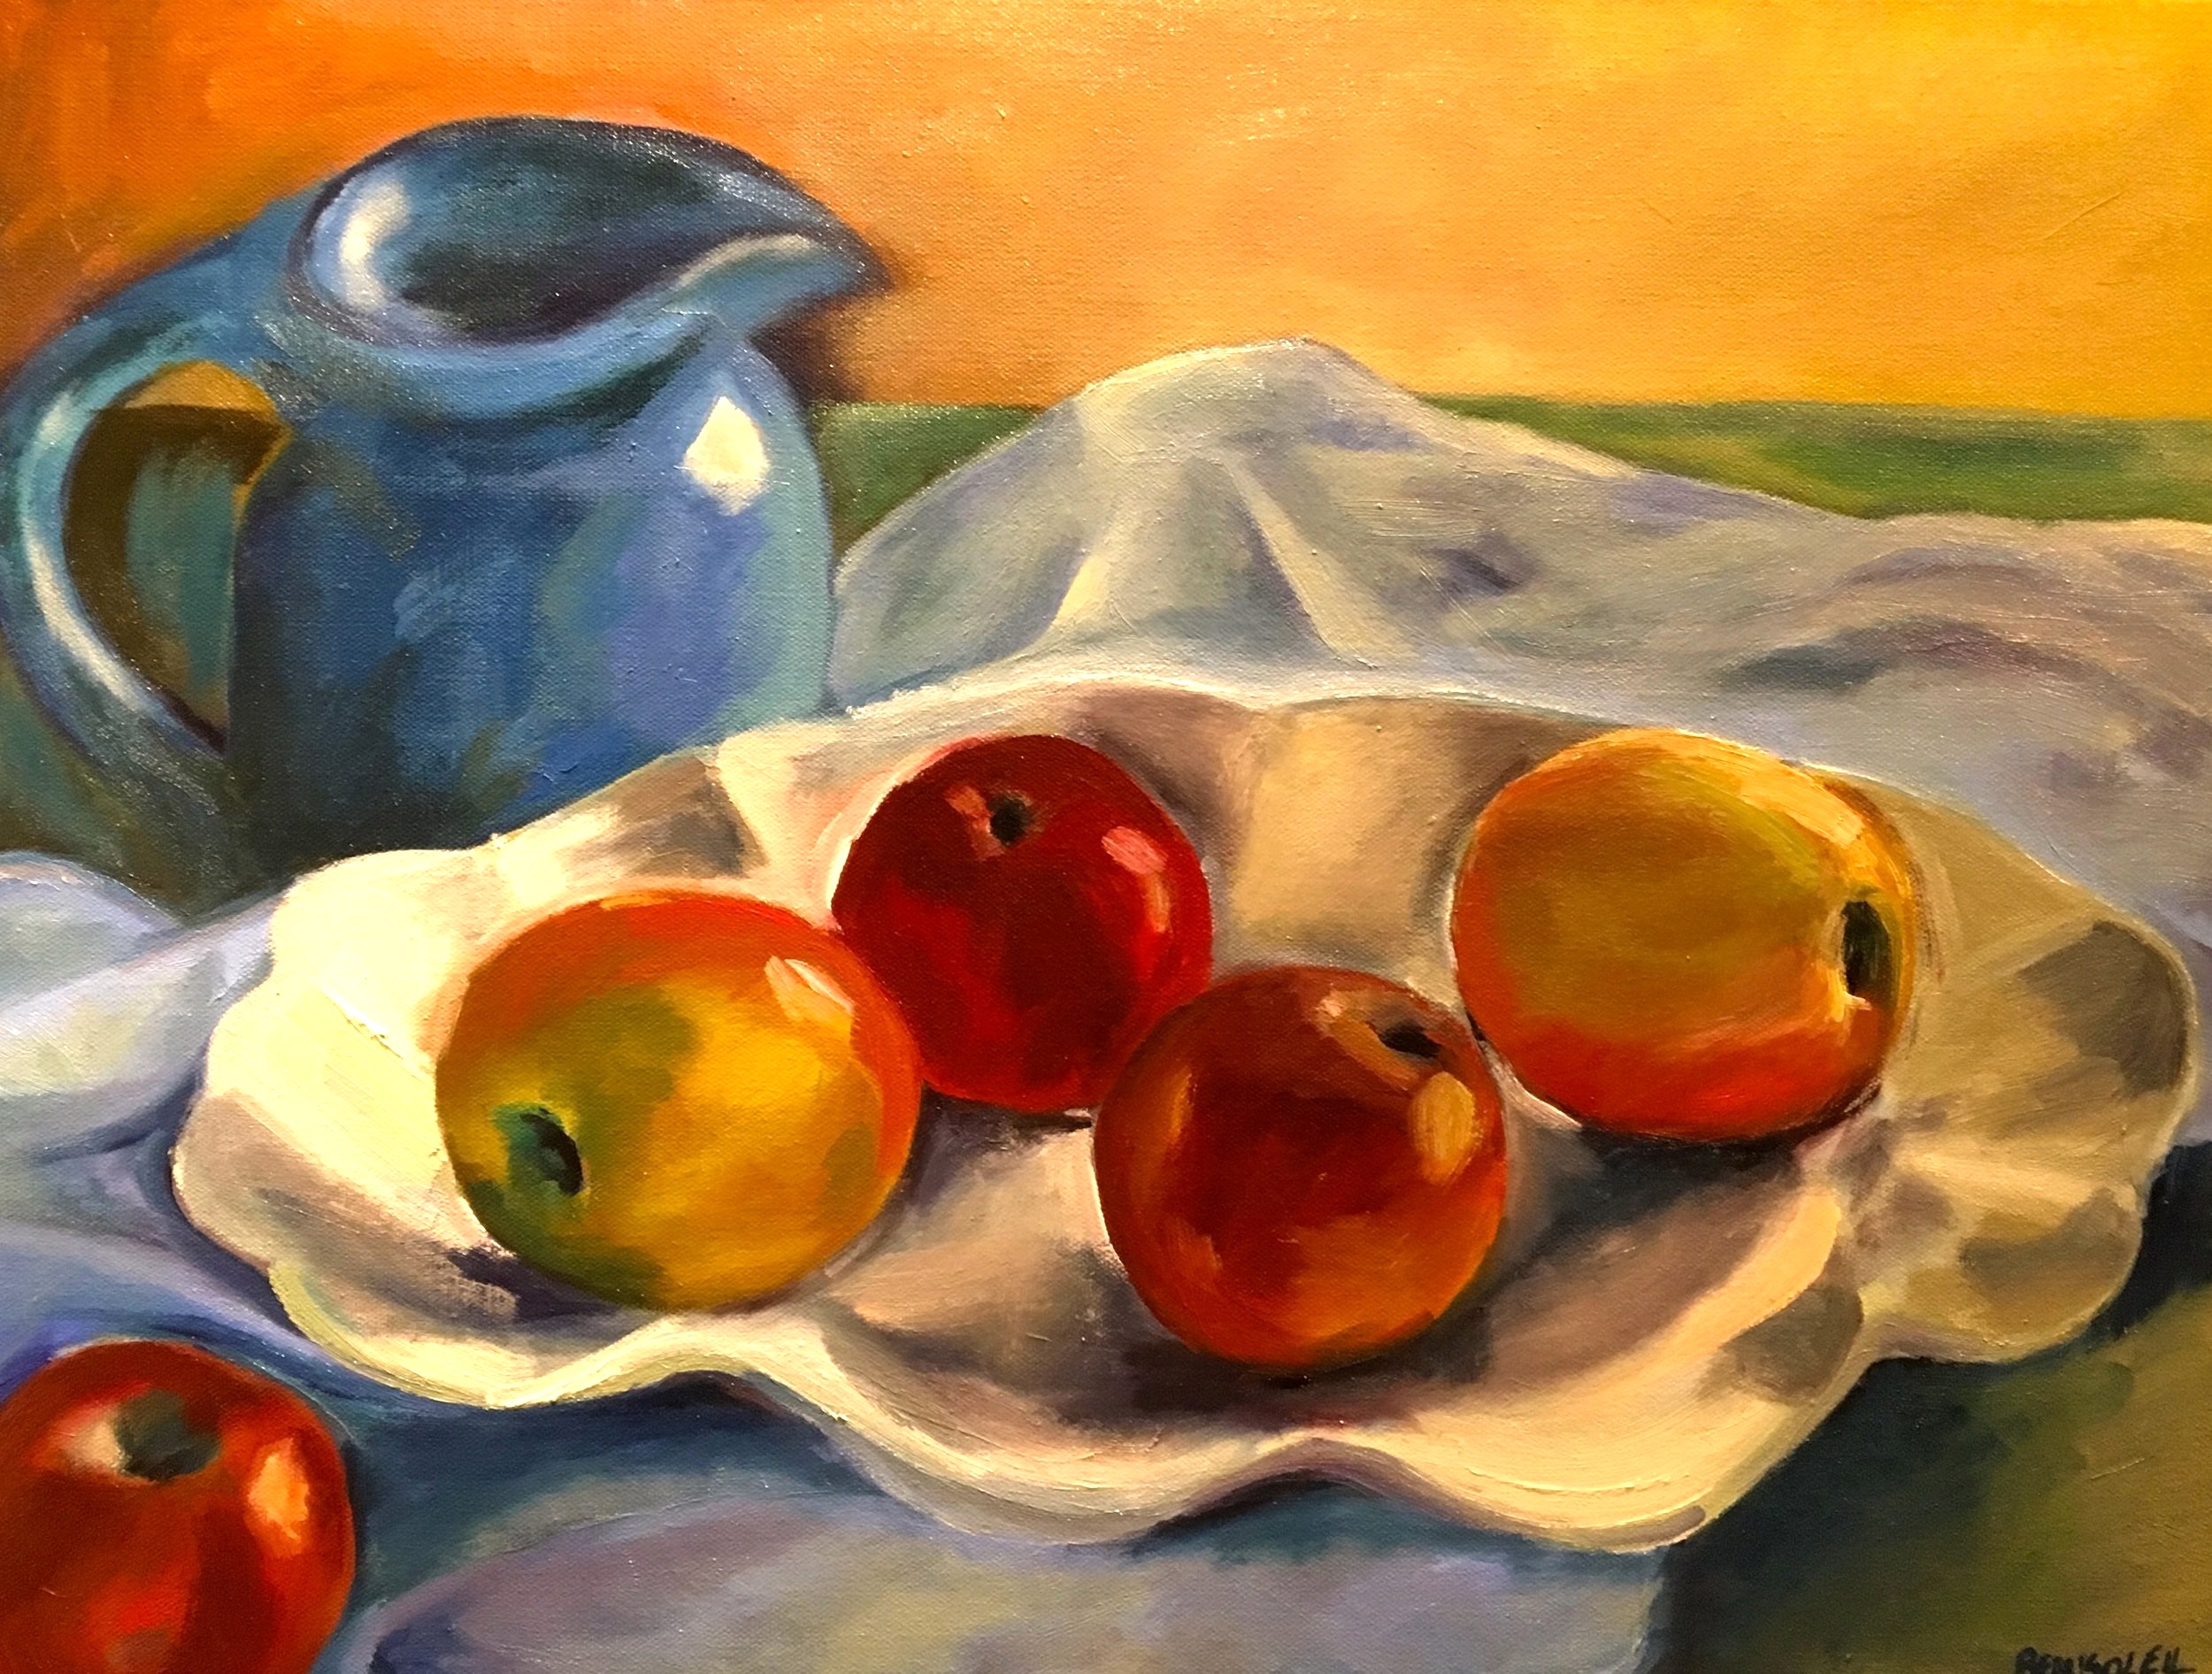 Apples on Platter with Blue Jug, 2017